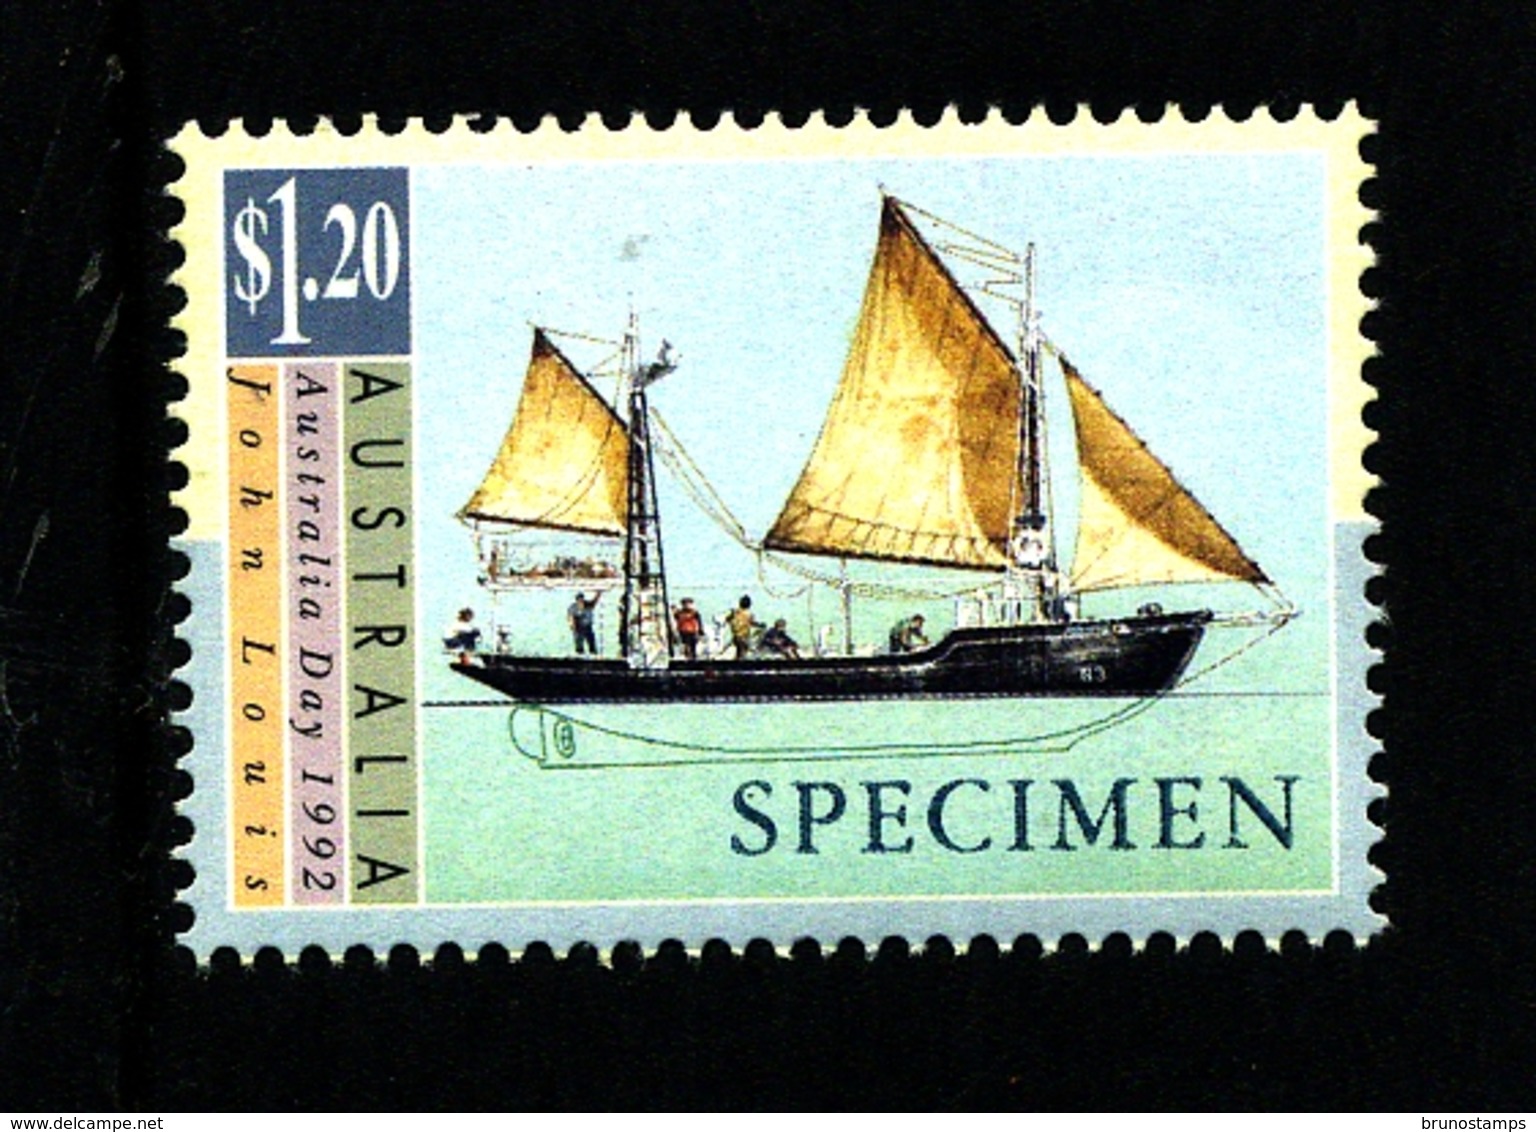 AUSTRALIA - 1993  $  1.20  J. LOUIS  SPECIMEN  OVERPRINTED  MINT NH - Abarten Und Kuriositäten